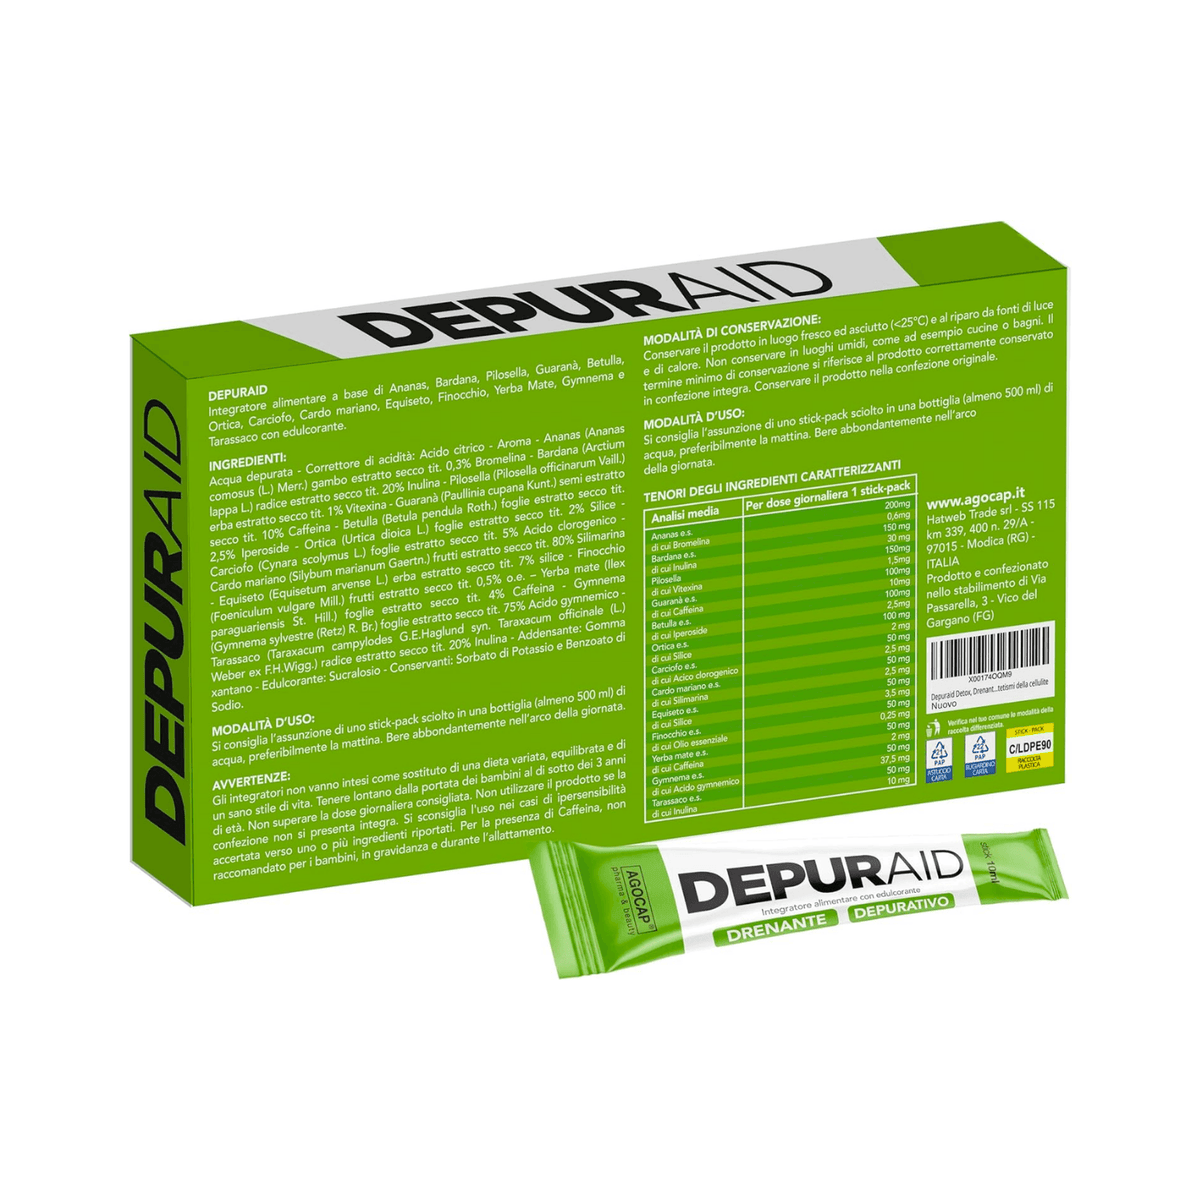 Integratore Detox Depurativo. Depuraid Integratore drenante, diuretico